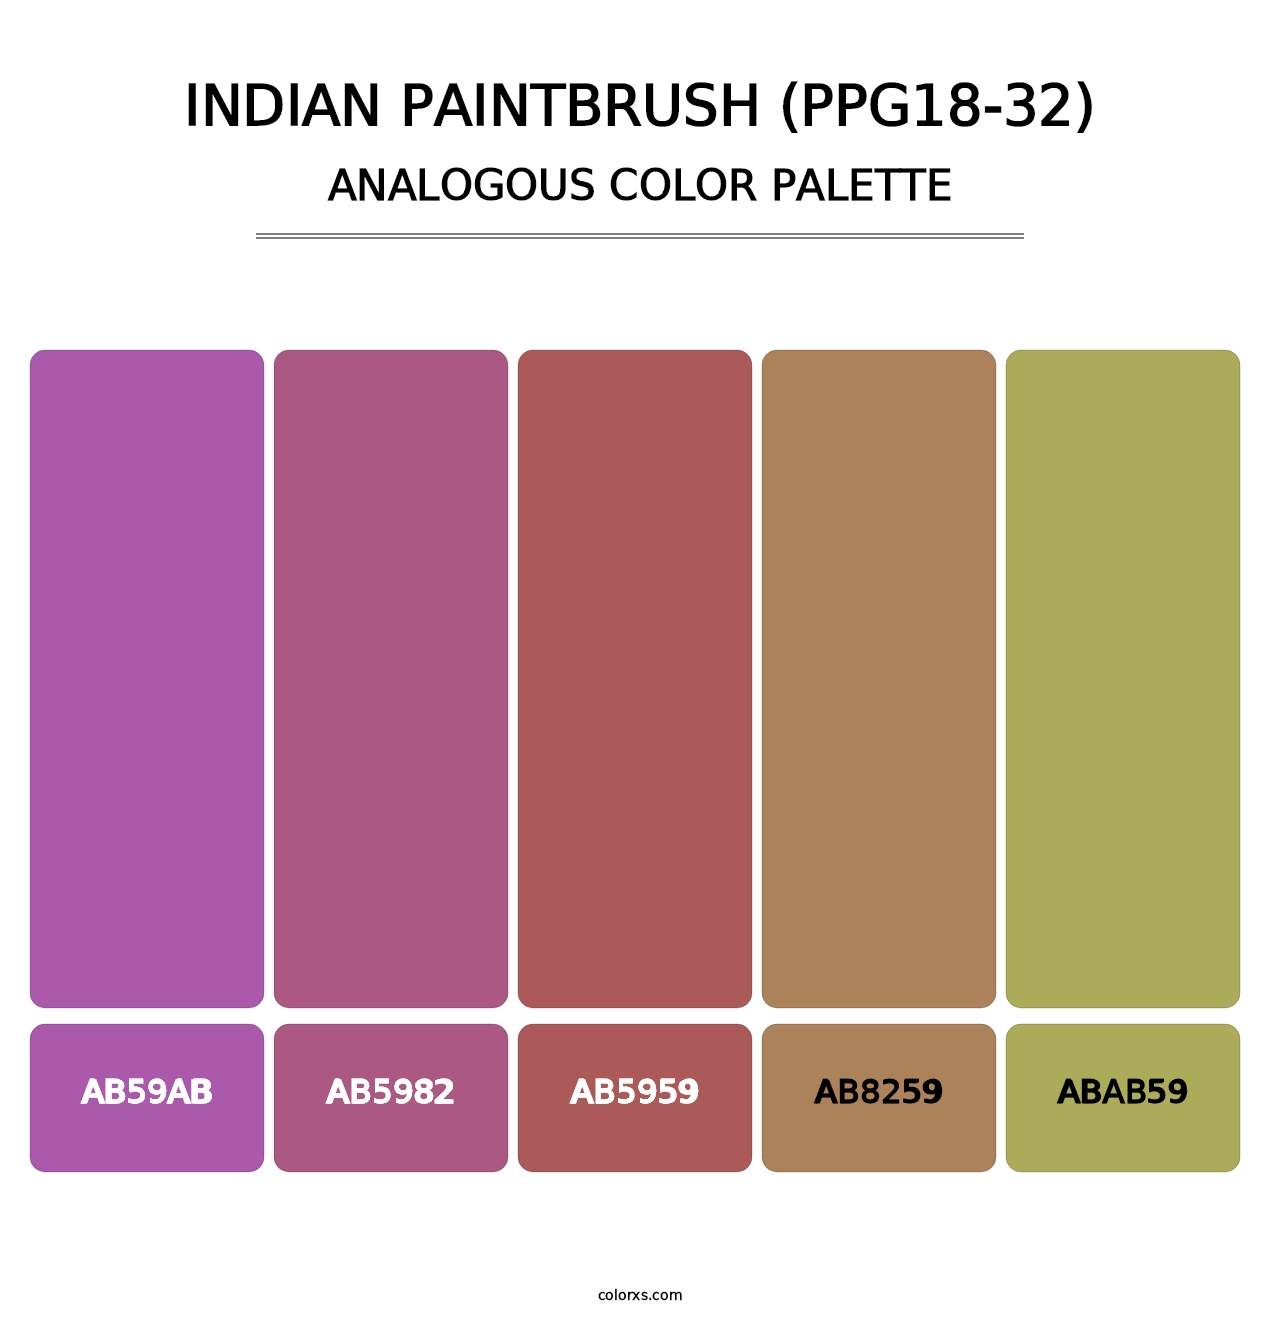 Indian Paintbrush (PPG18-32) - Analogous Color Palette